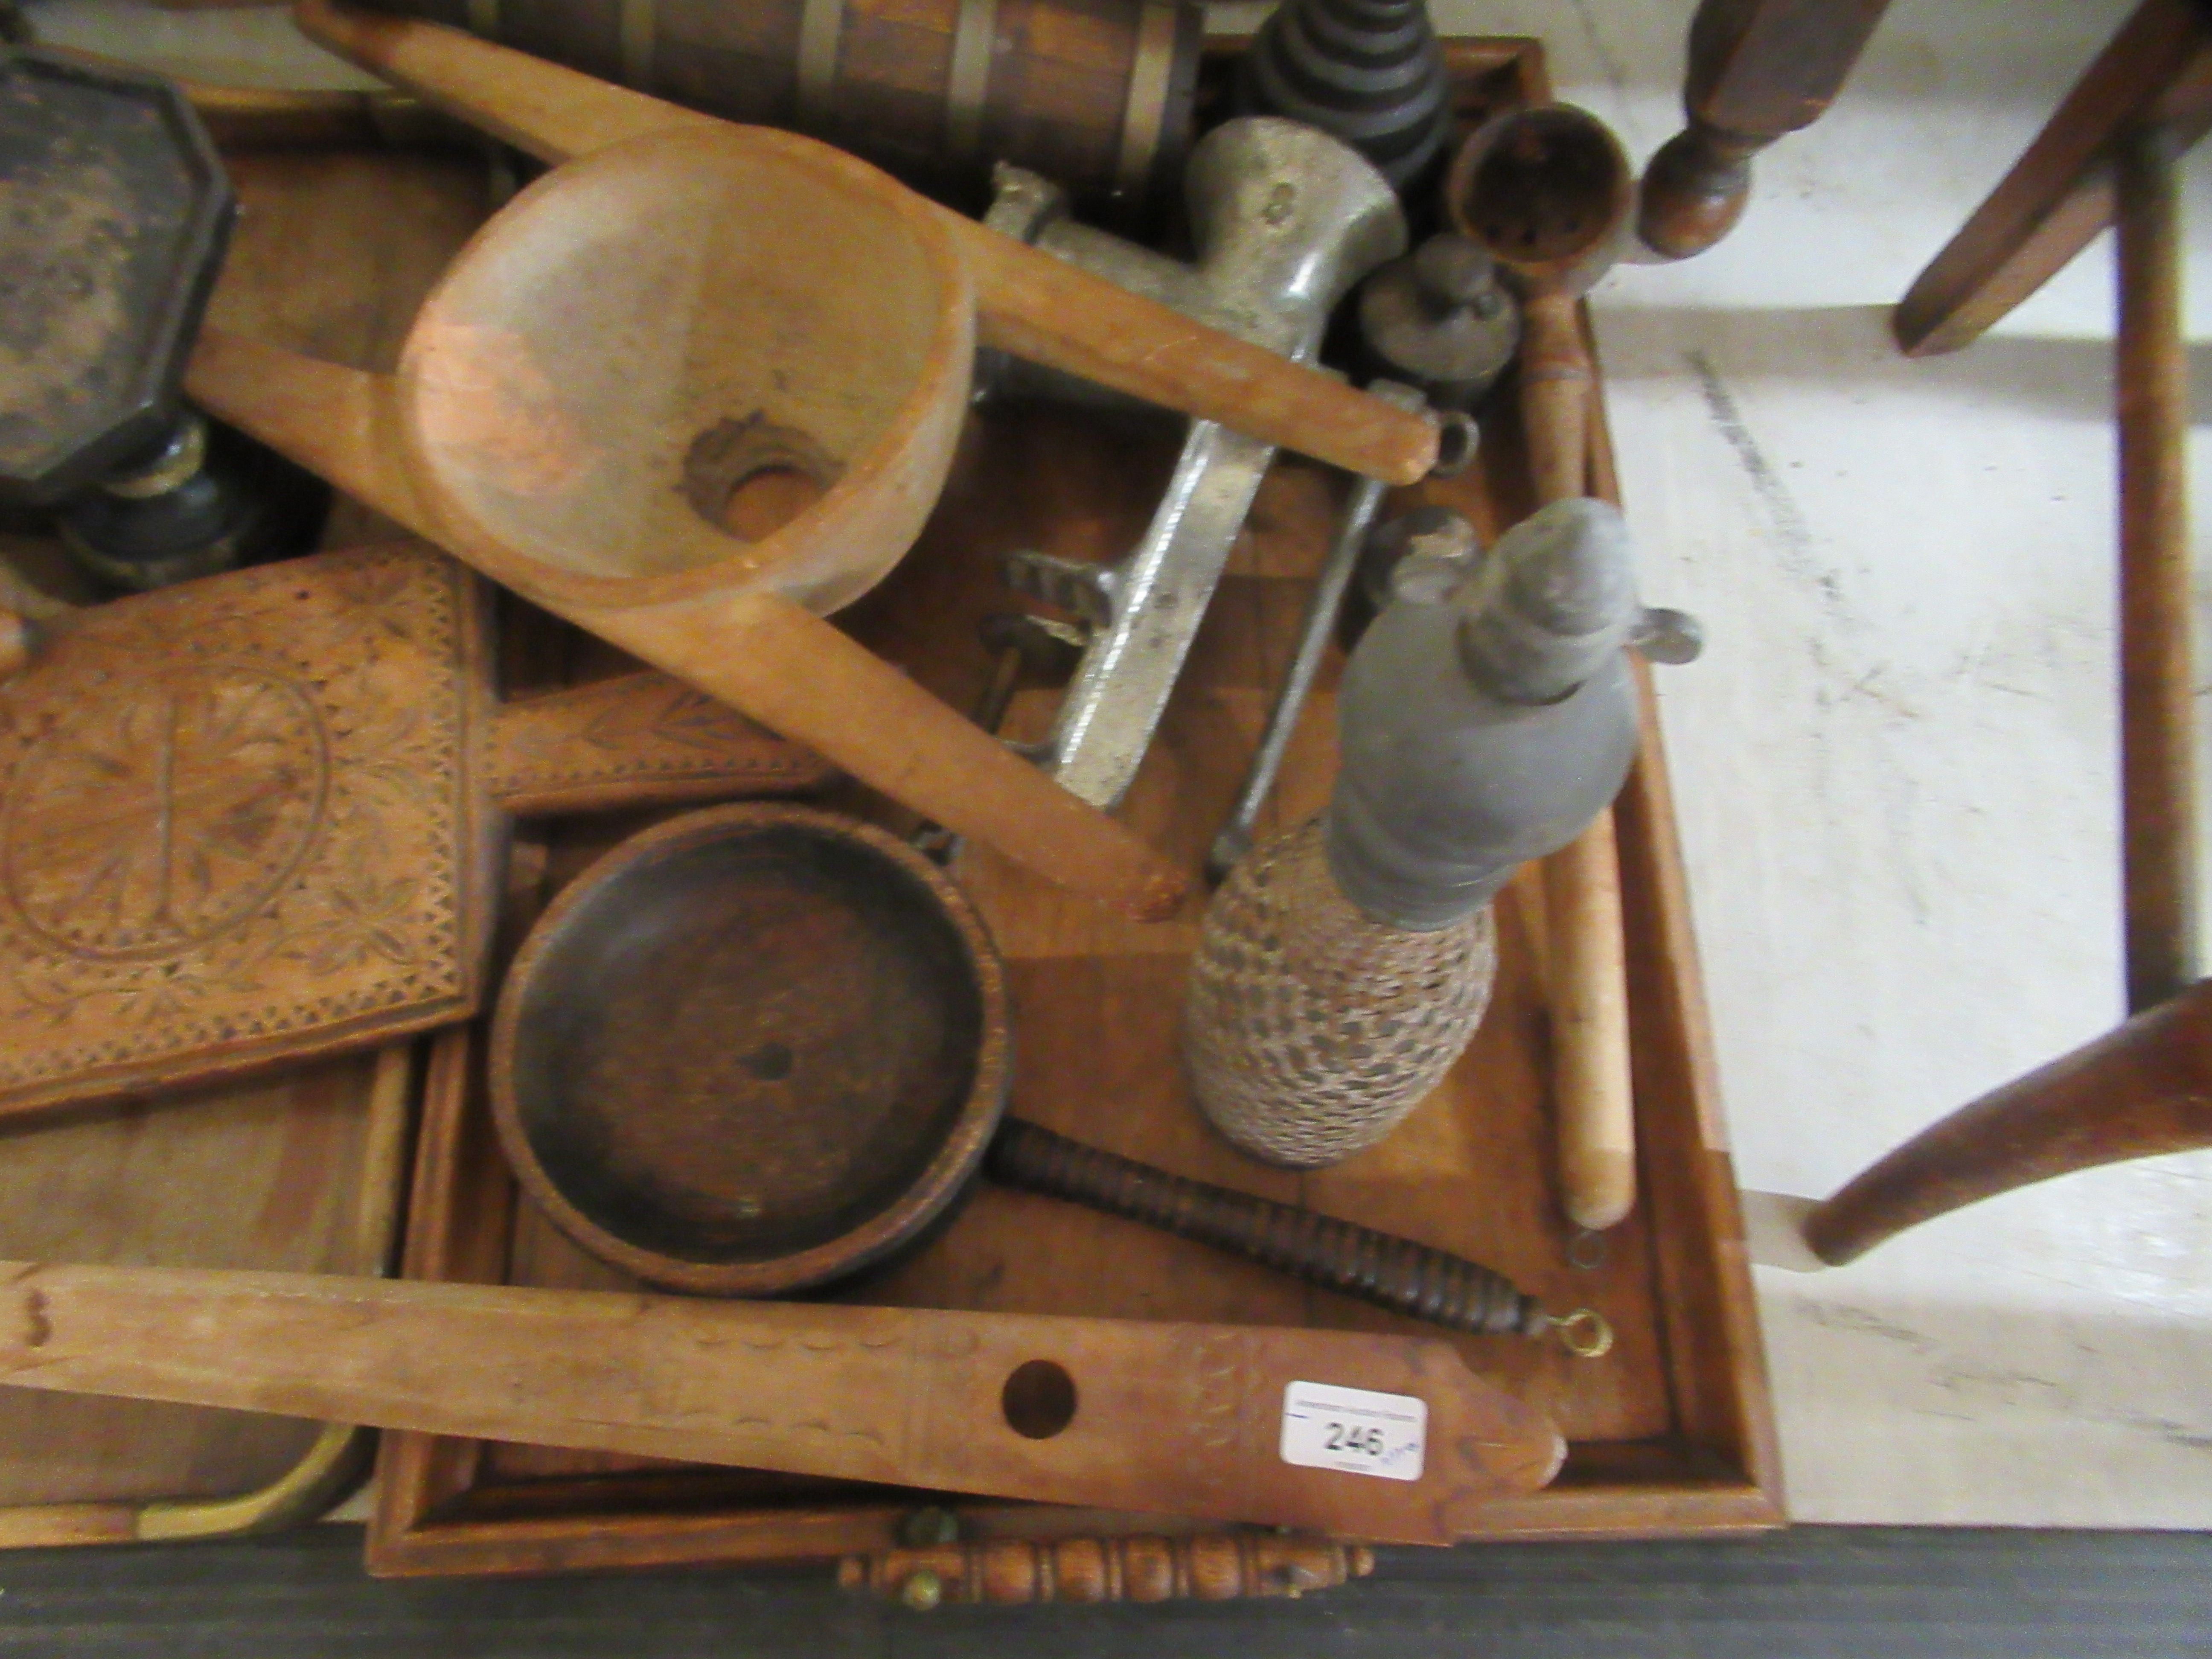 Wooden implements and vintage kitchen bygones - Image 3 of 7